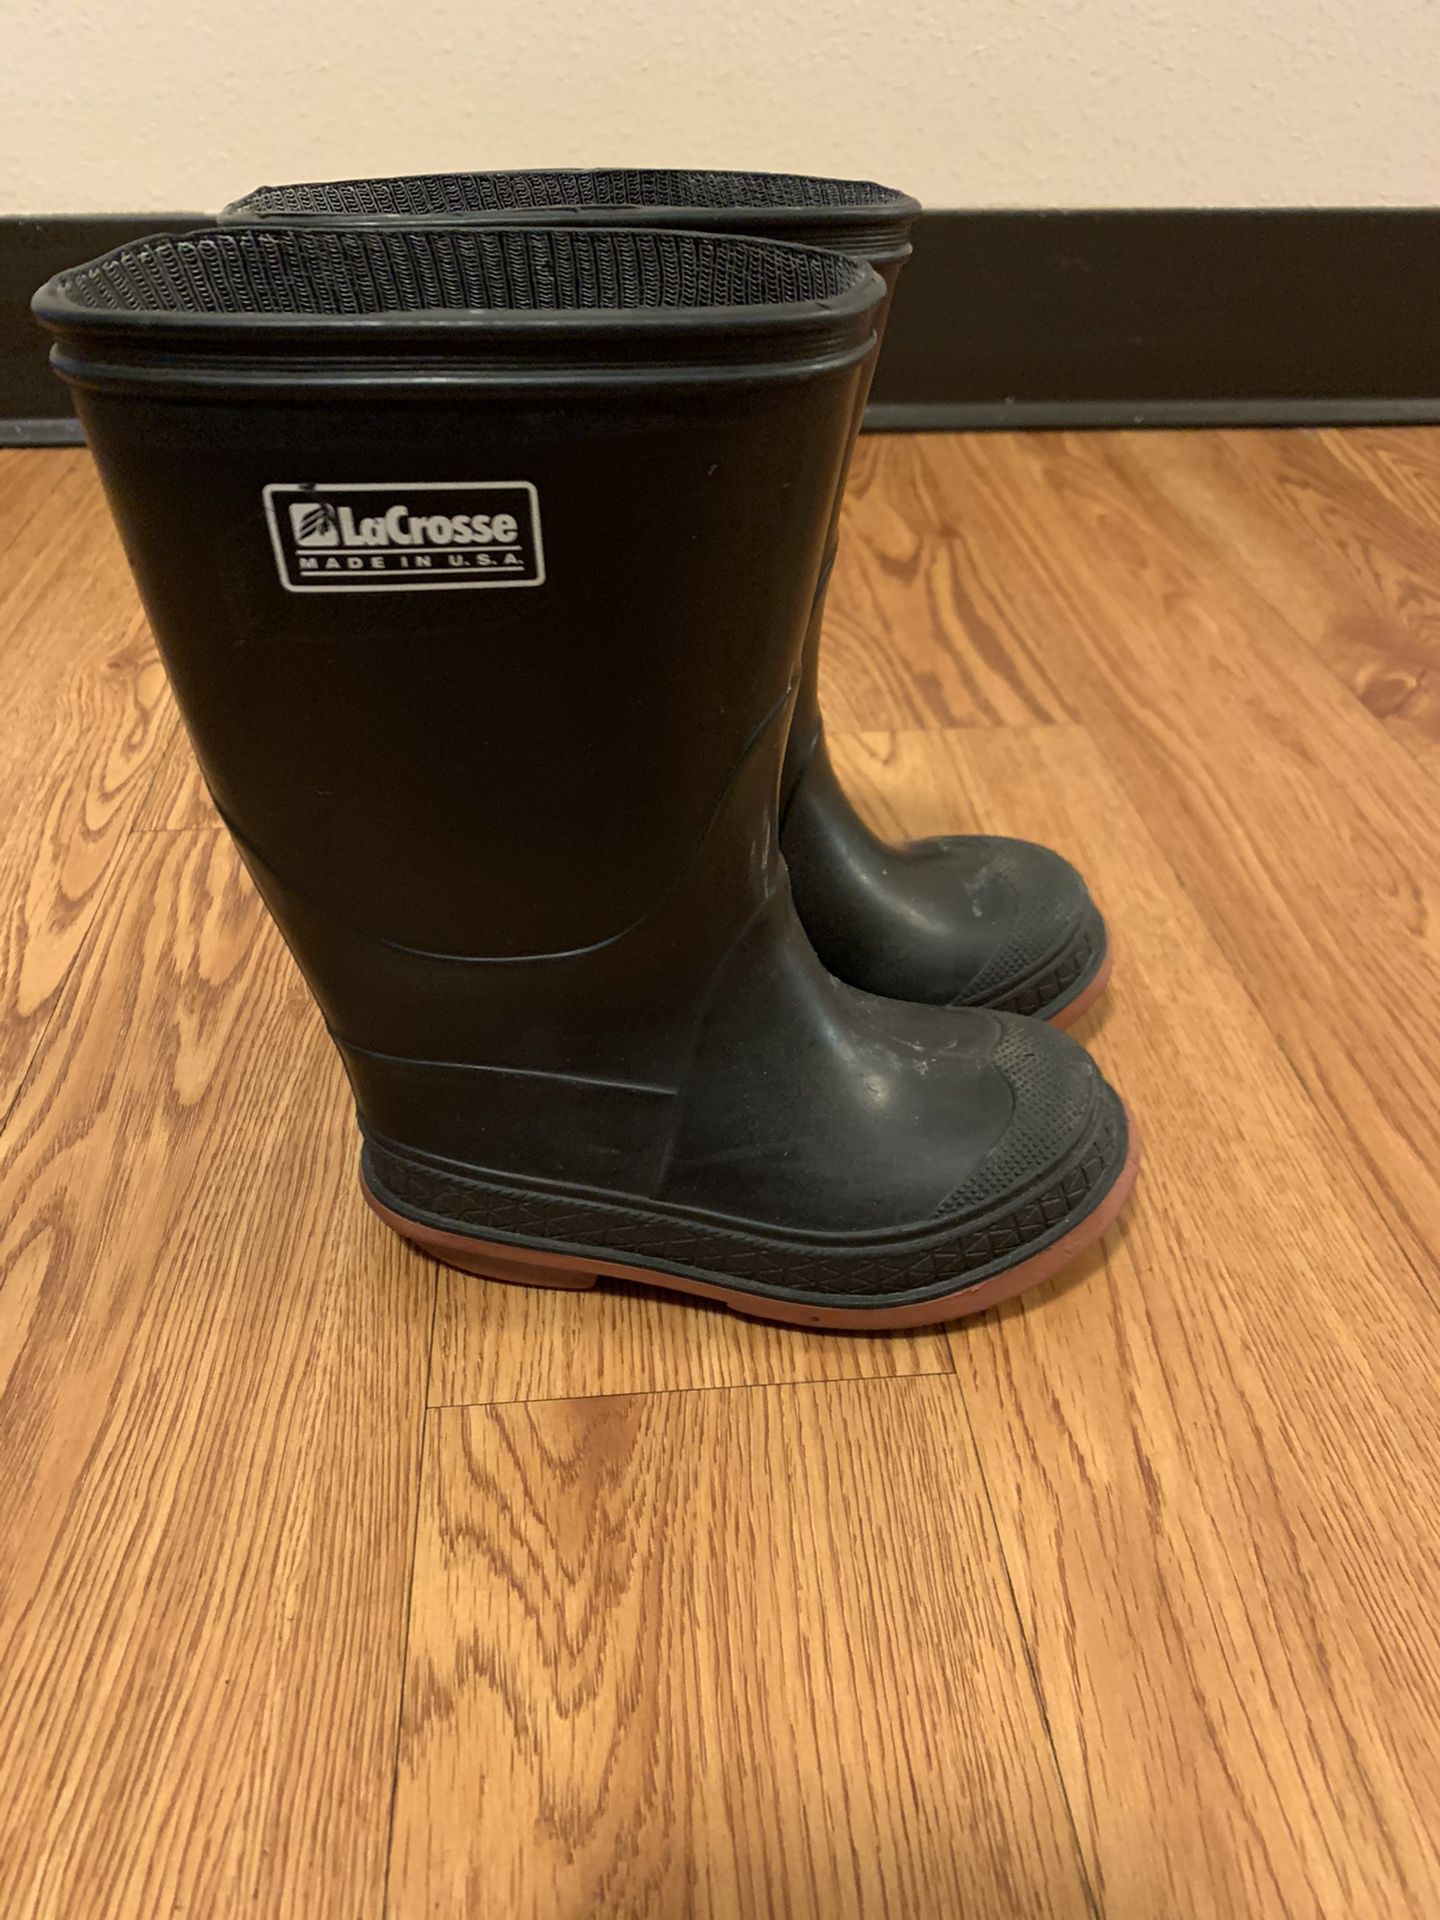 La crosse rain boots size 7